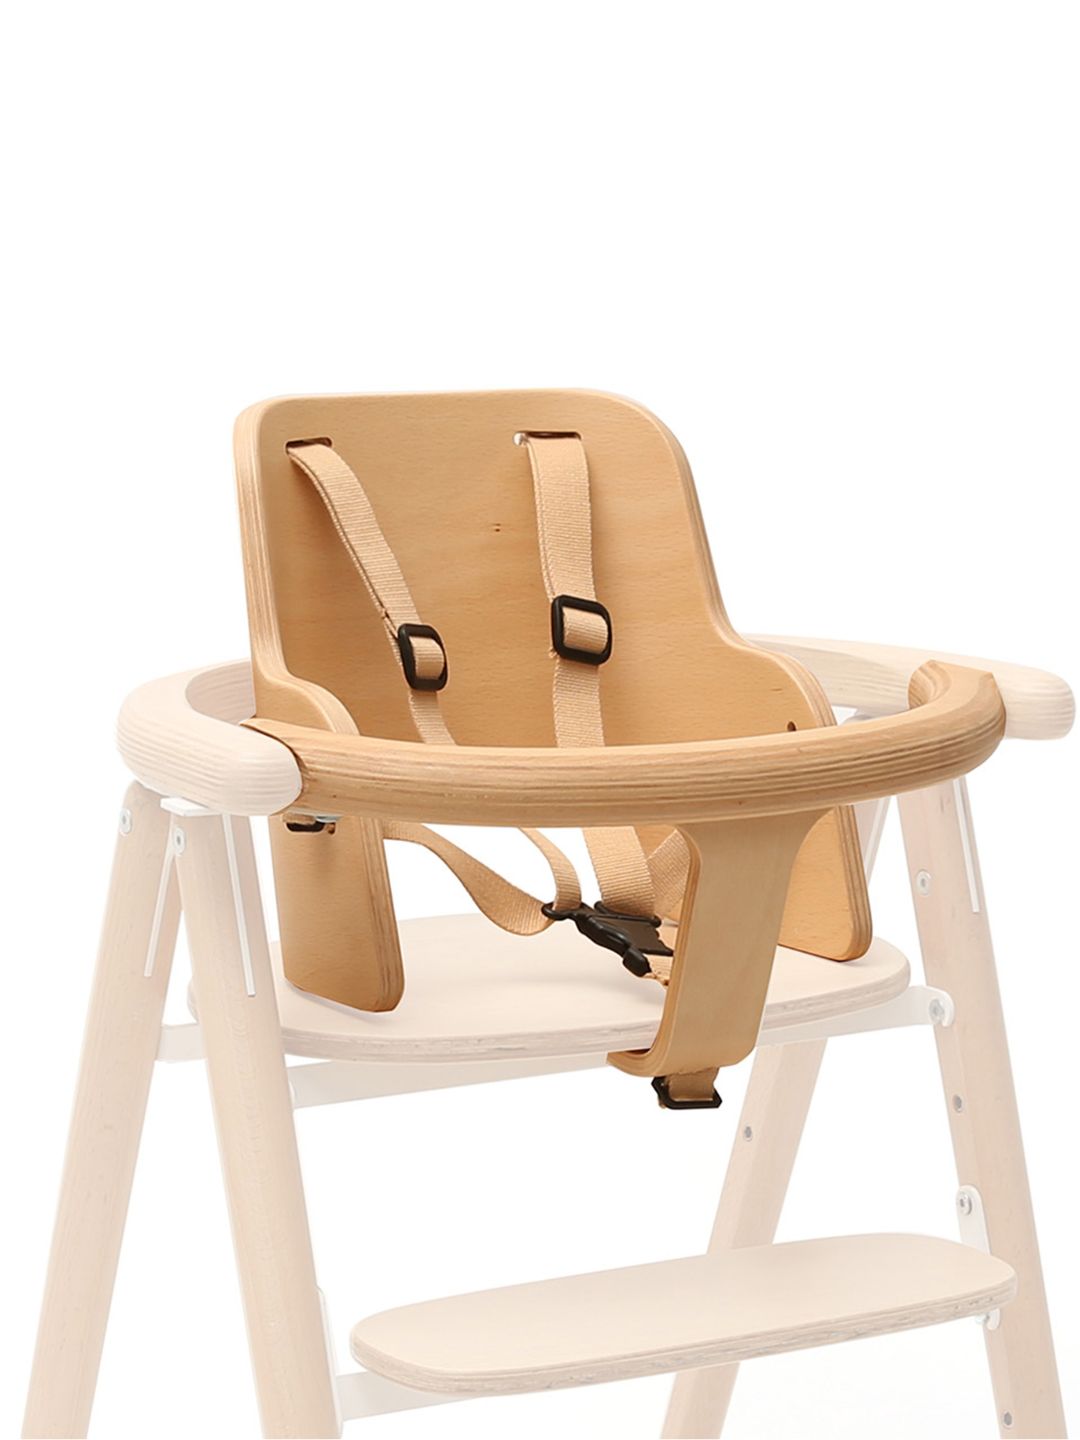 Charlie Crane Baby Set for TOBO Chair, Charlie Crane Tobo söögitooli beebisisu komplekt, beebiiste